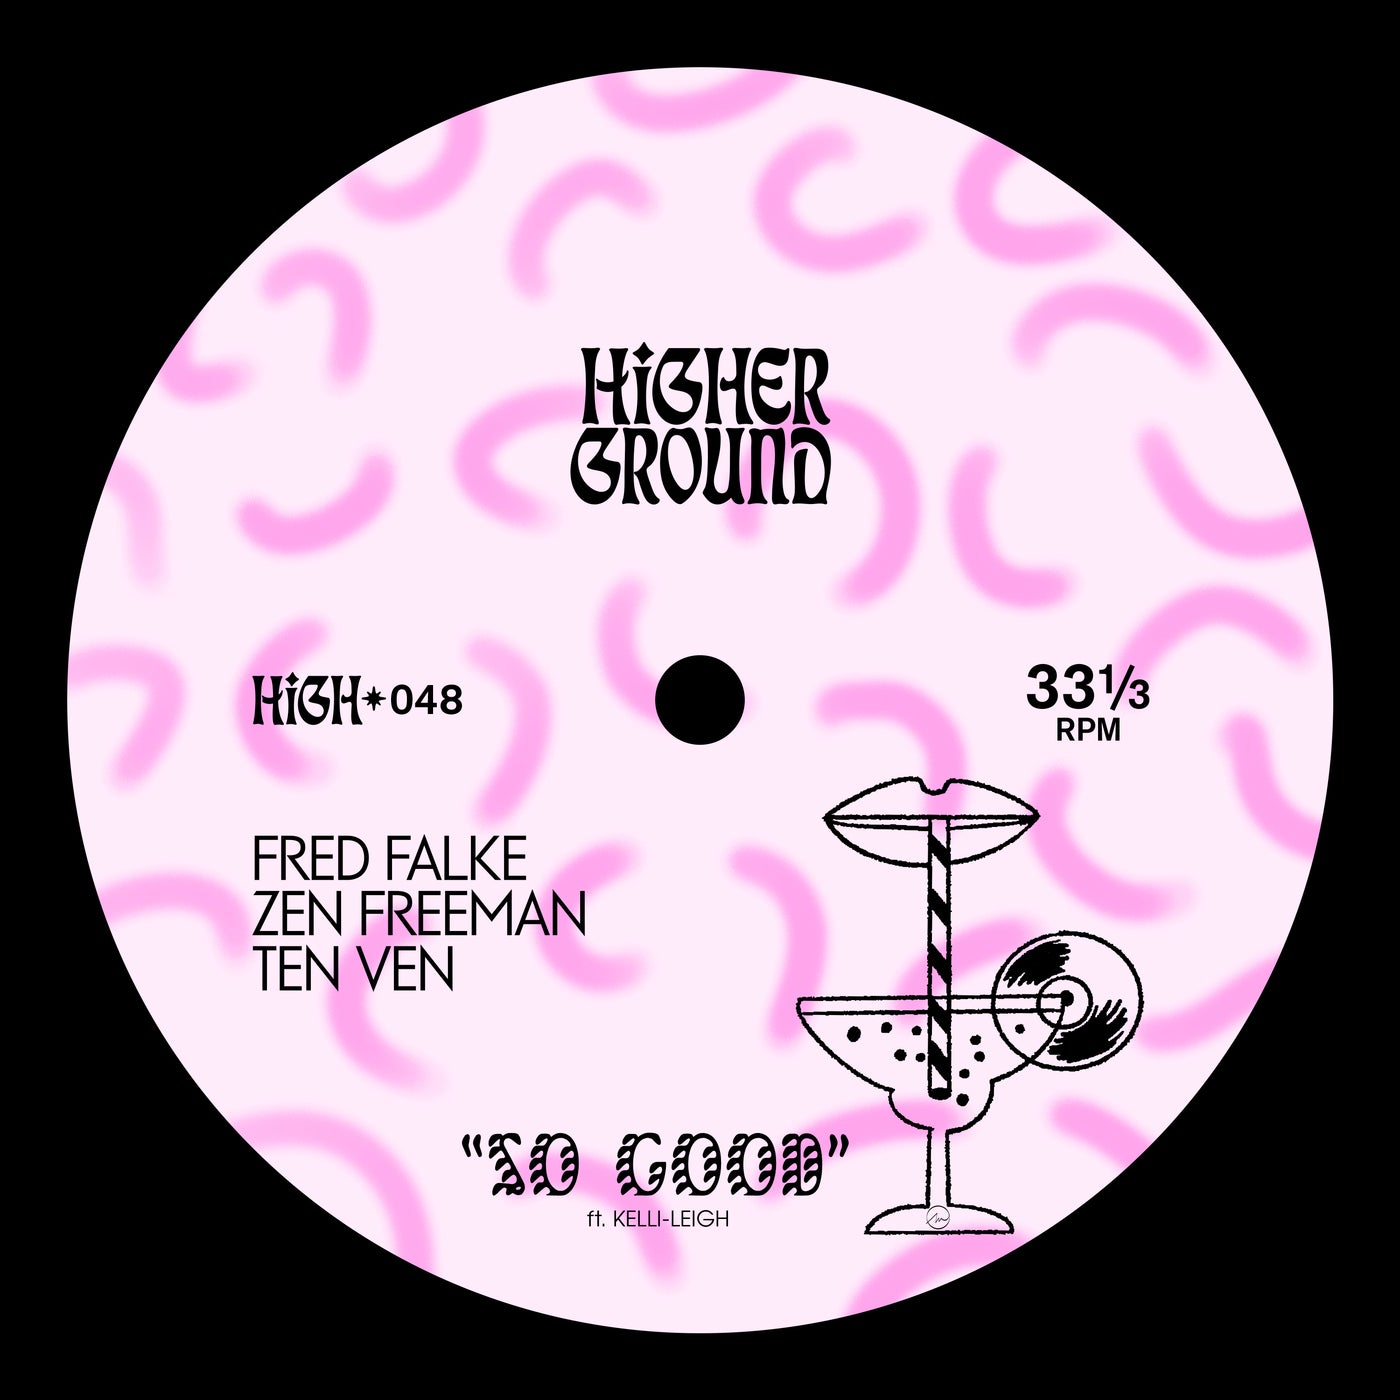 So Good (Extended) by Kelli-Leigh, Fred Falke, Ten Ven and Zen Freeman on  Beatsource